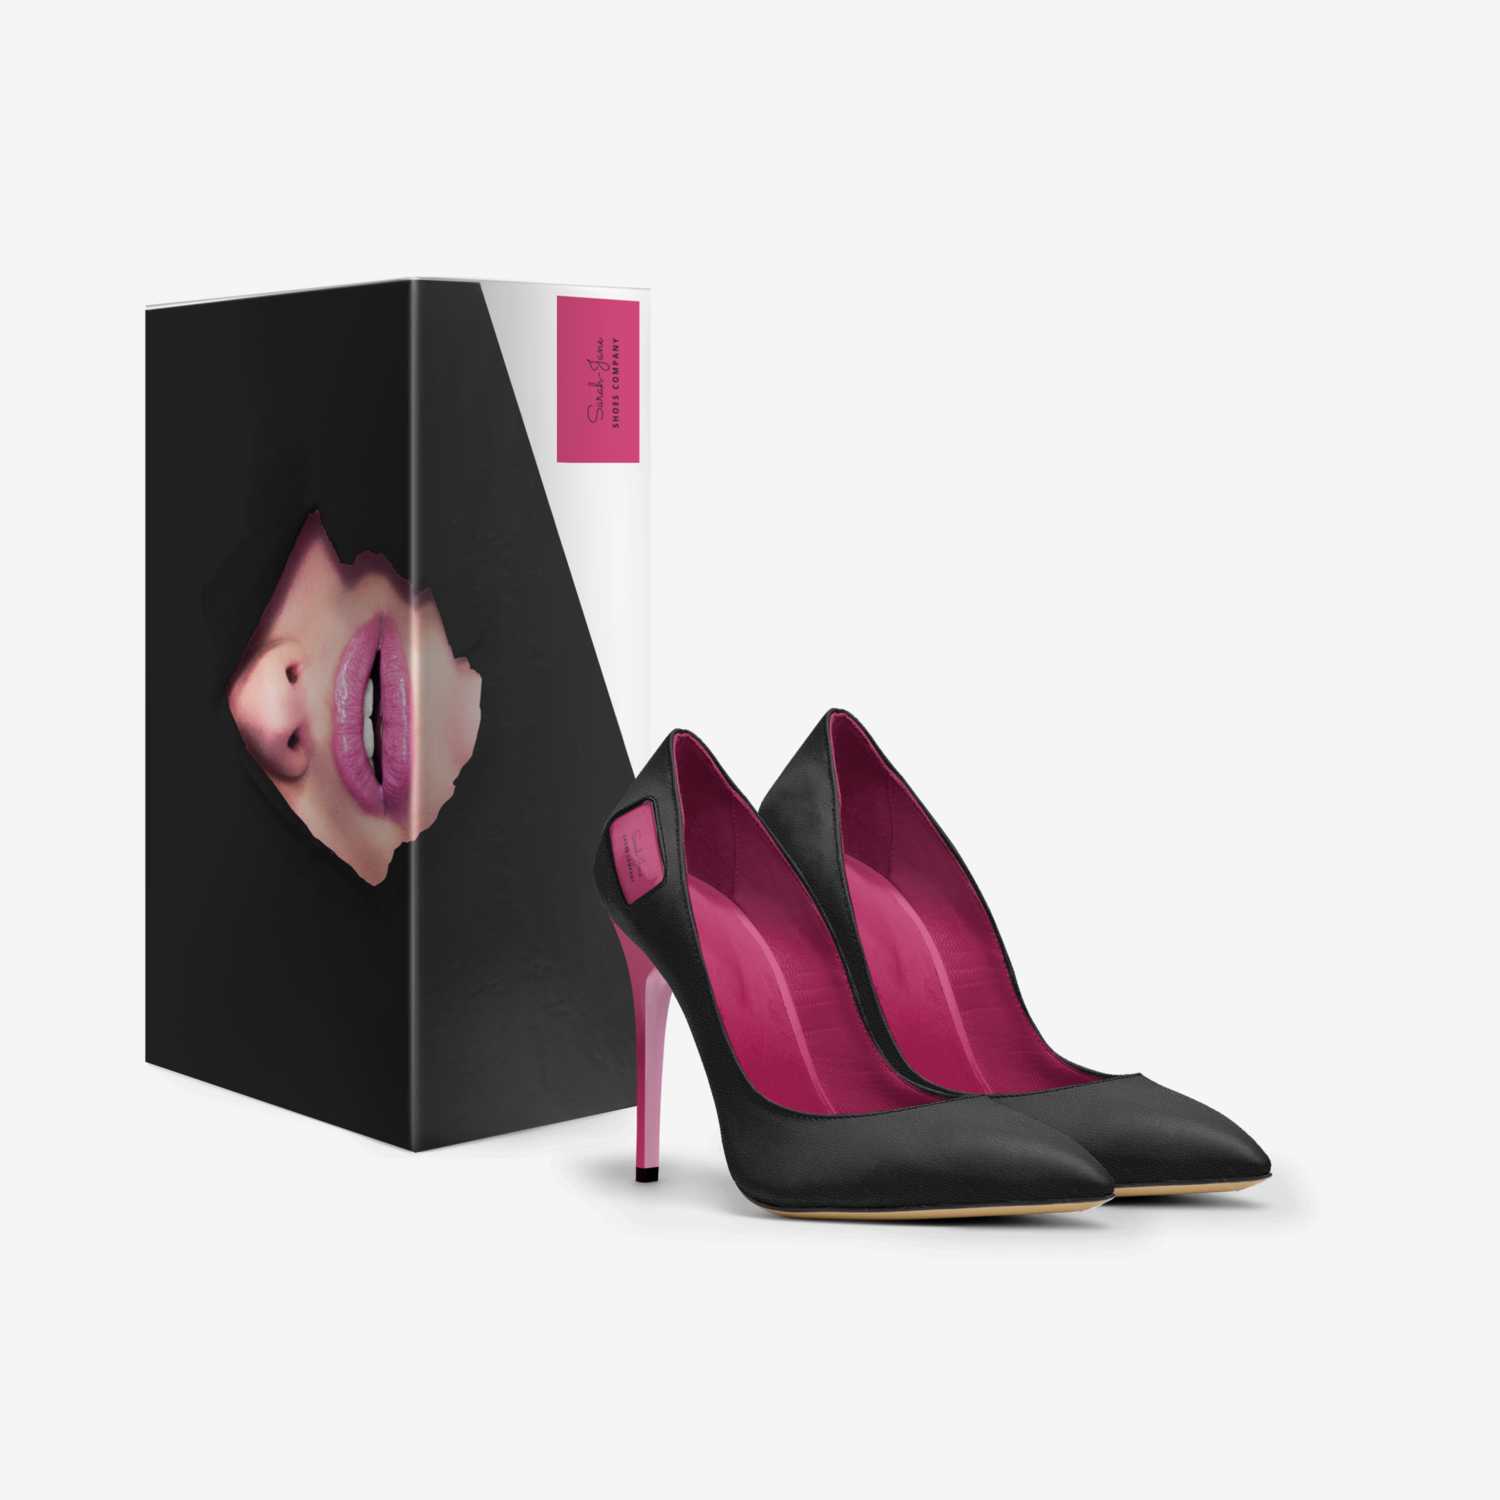 Sarah-Jane custom made in Italy shoes by Sarah-jane Perna | Box view